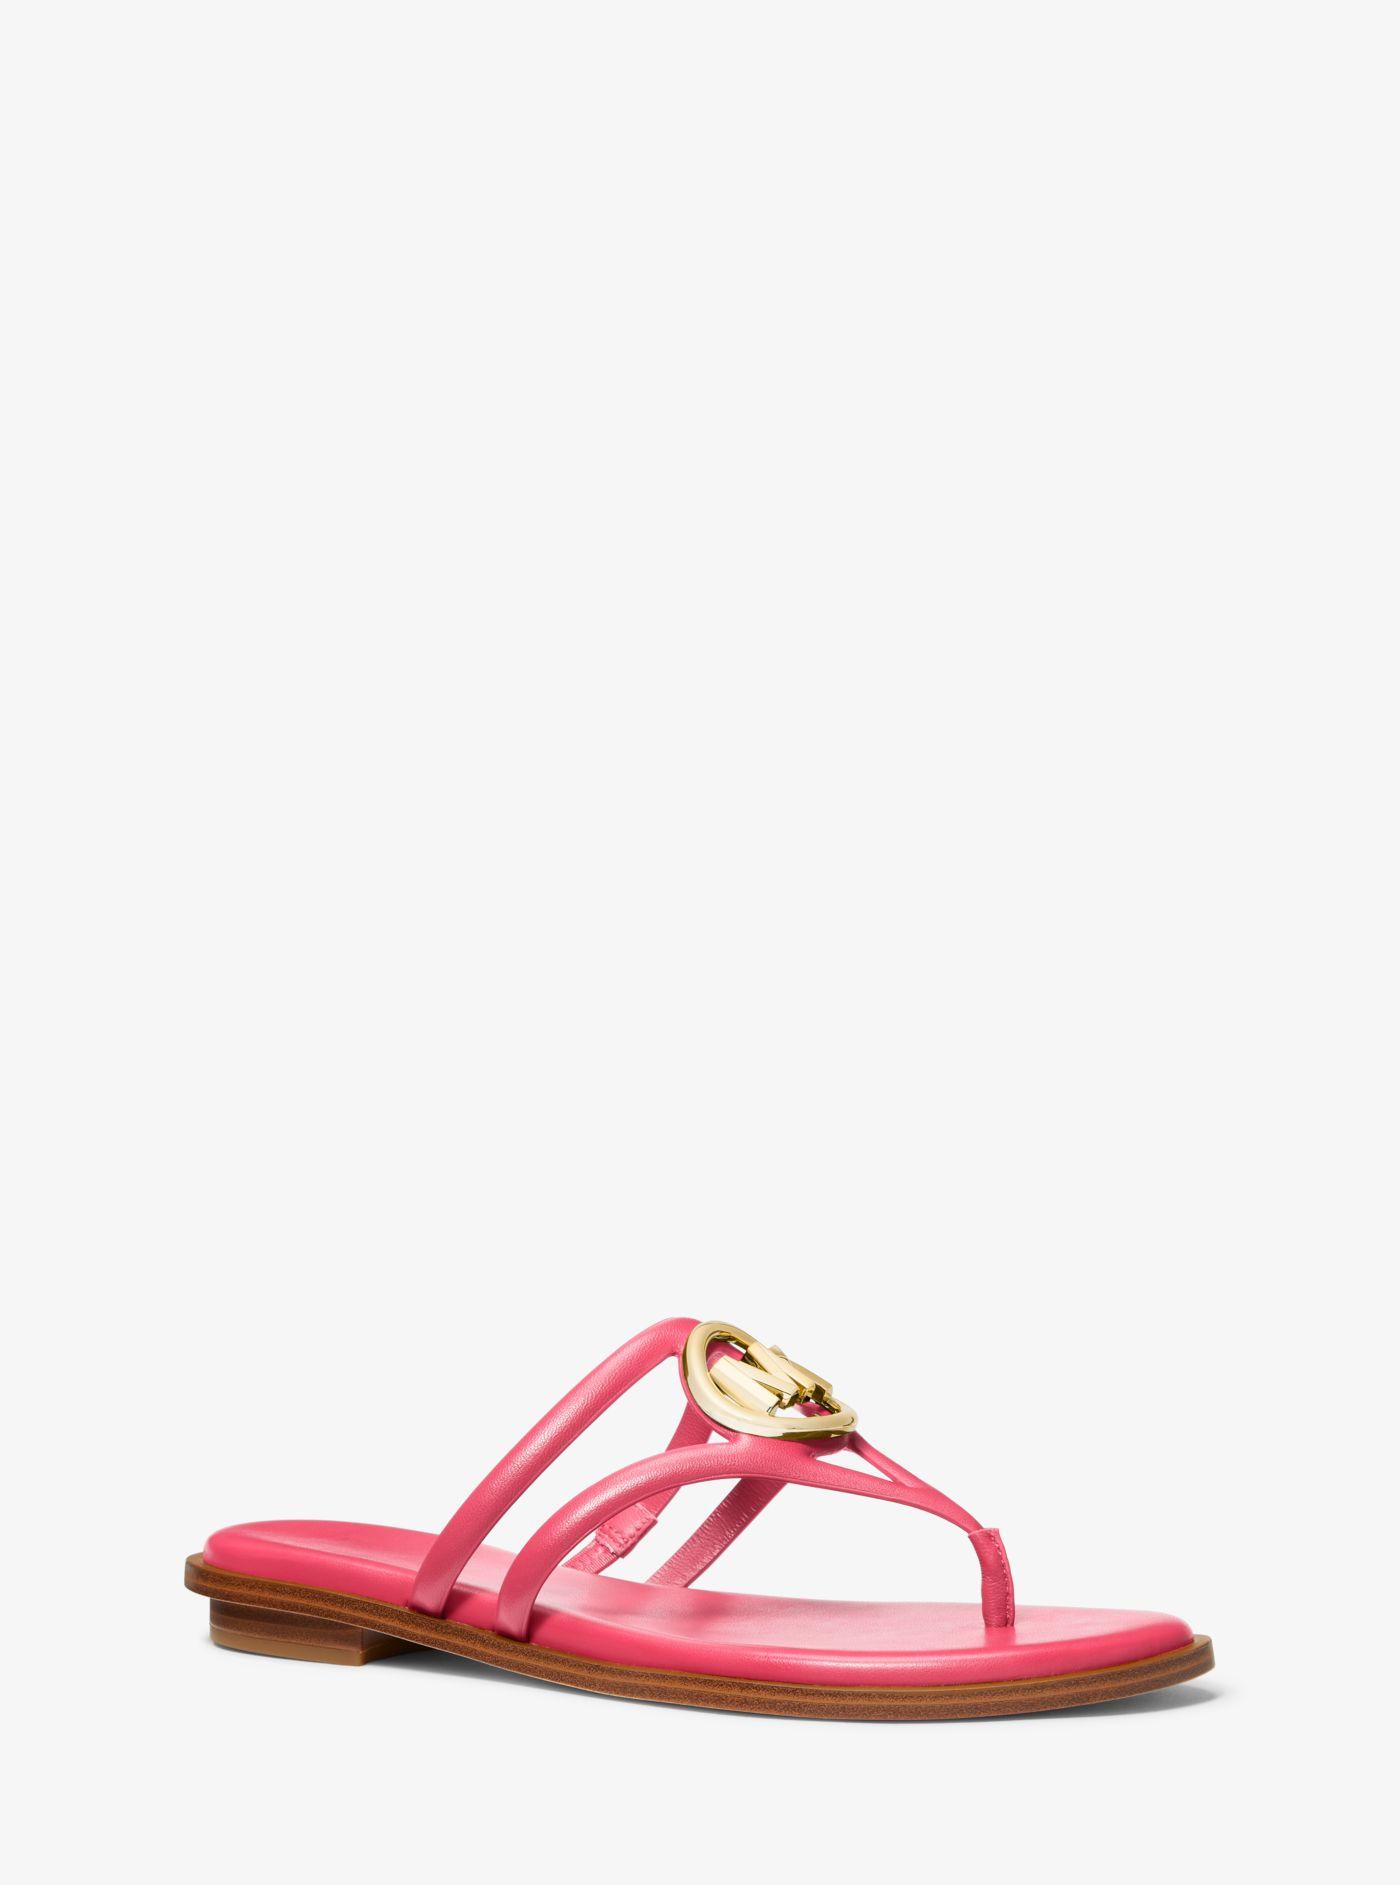 Michael Kors Hampton Leather Sandal in Pink | Lyst